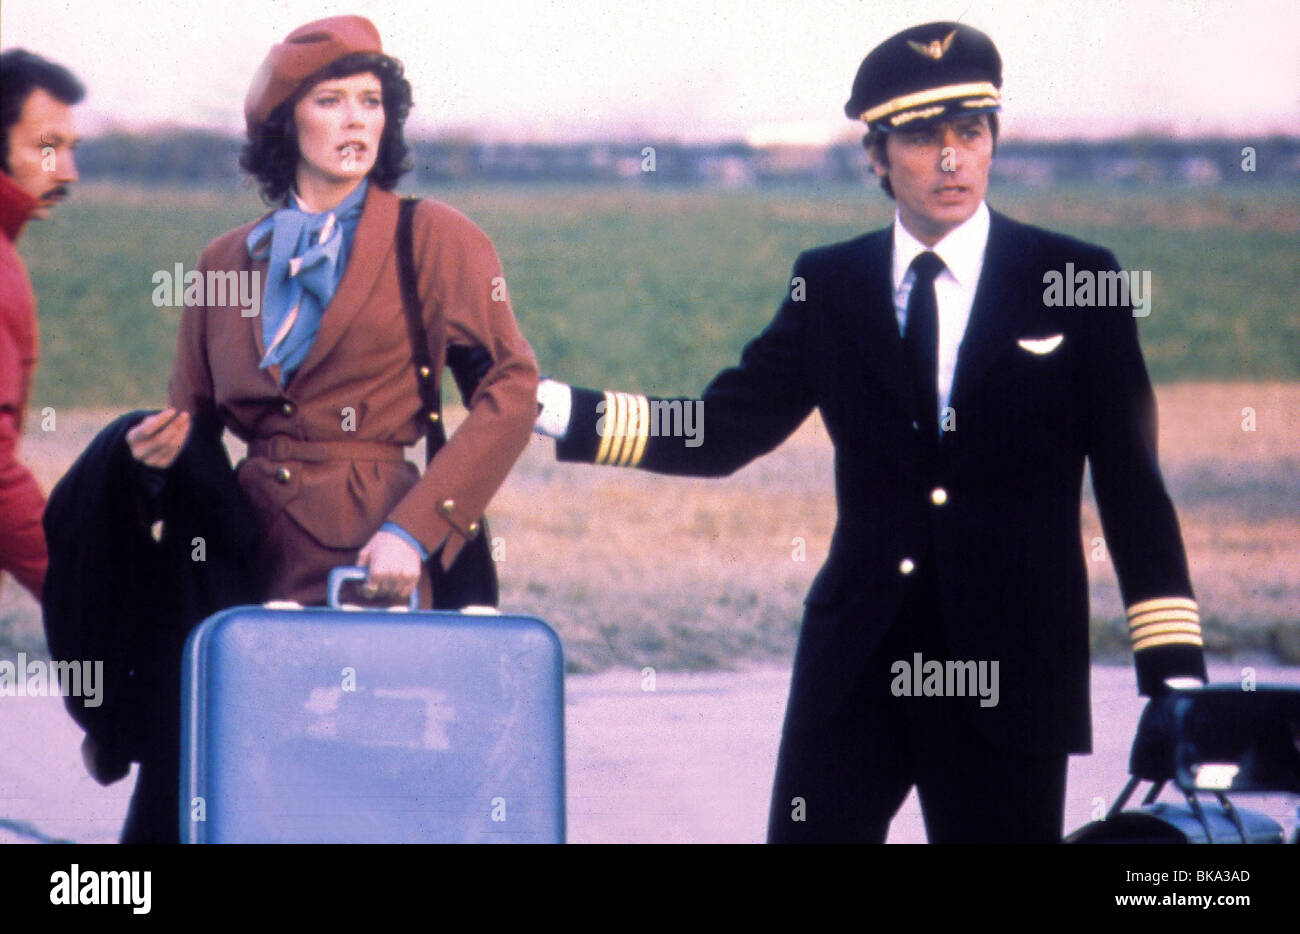 AIRPORT 80 : THE CONCORDE (1979) SYLVIA KRISTEL, ALAIN DELON A80 026 Stock Photo